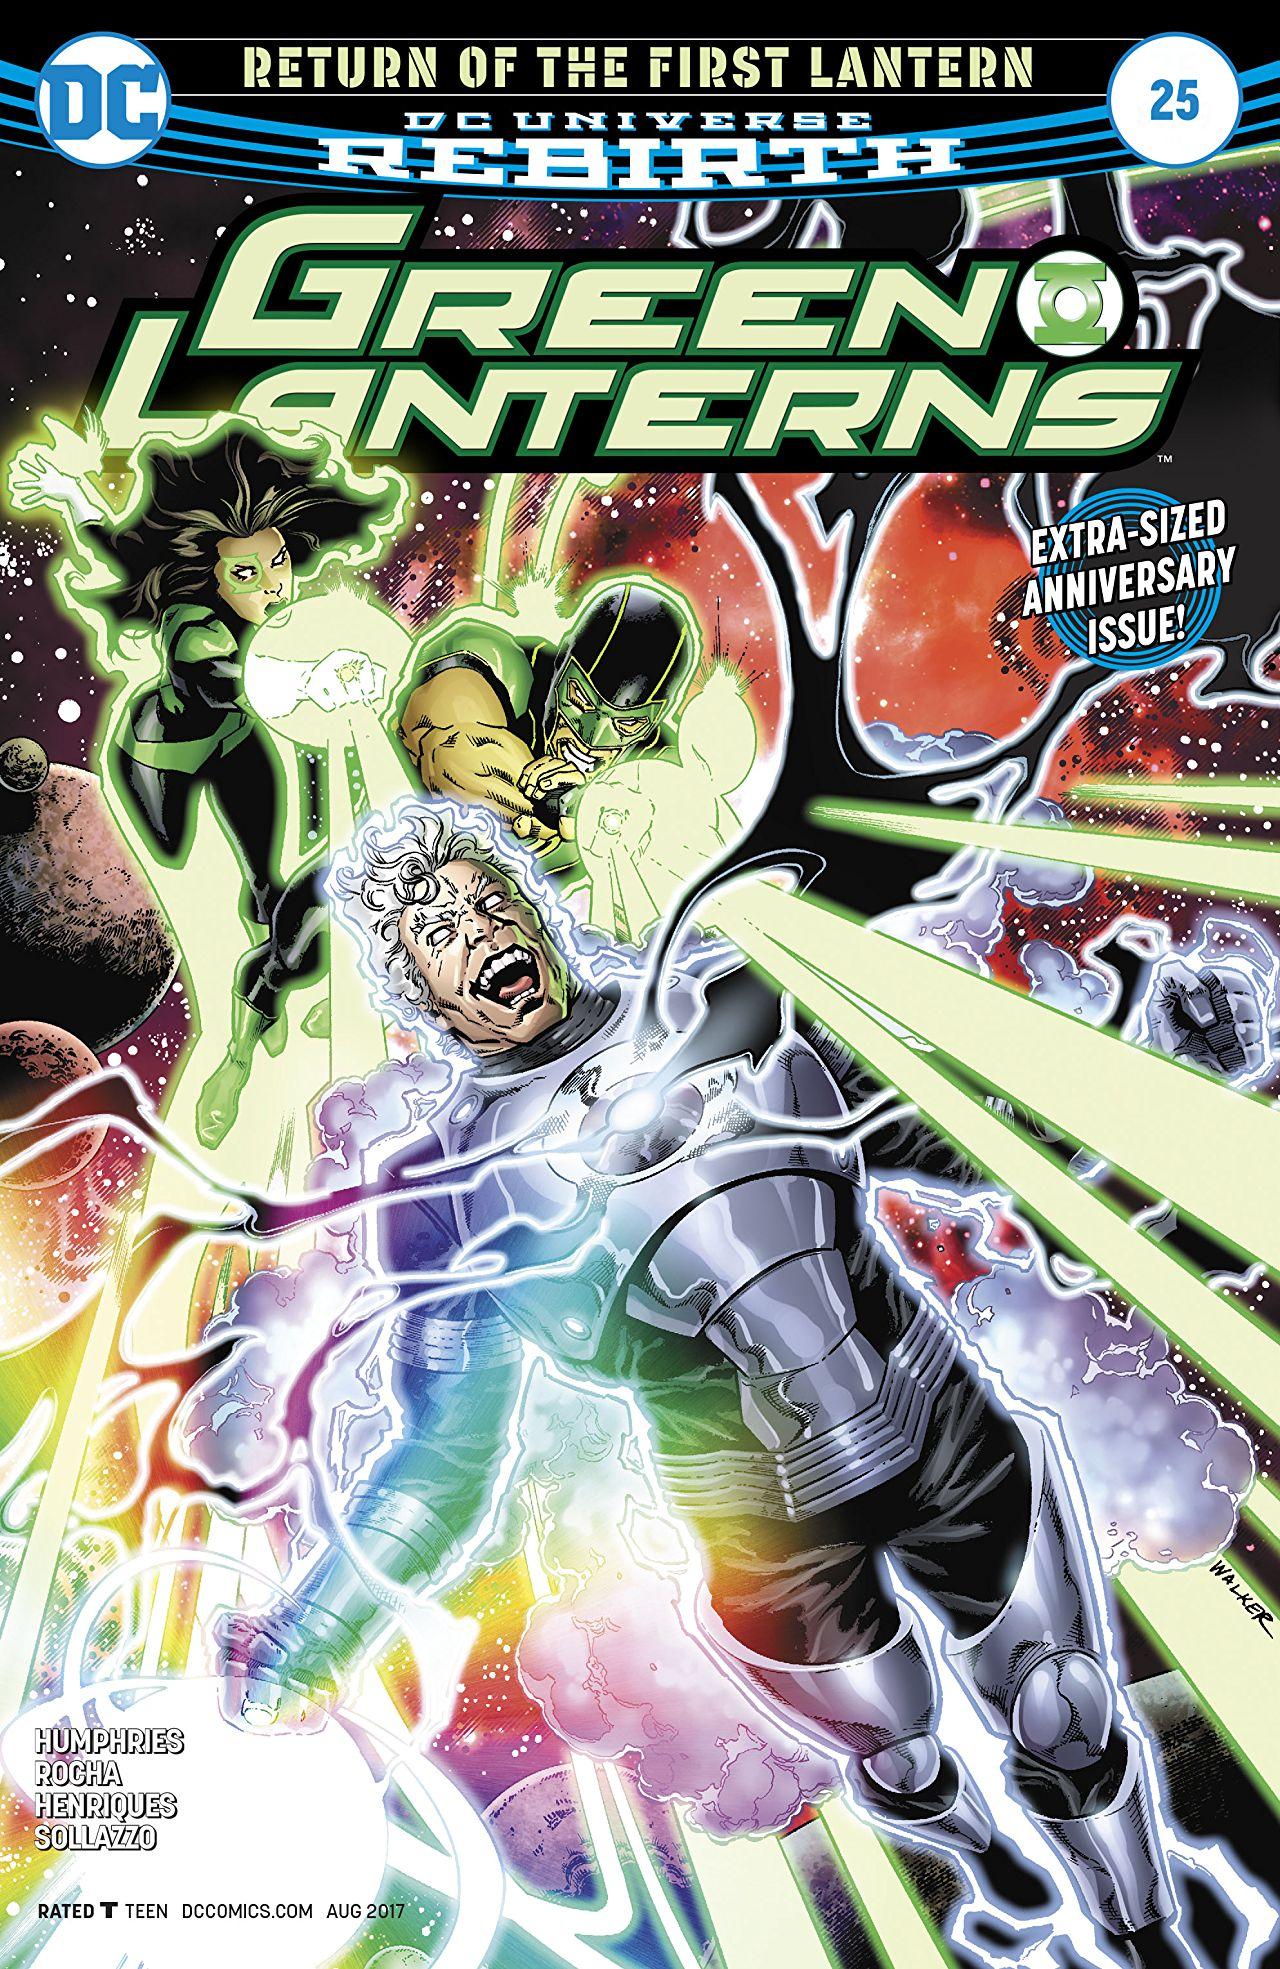 Green Lanterns Vol. 1 #25